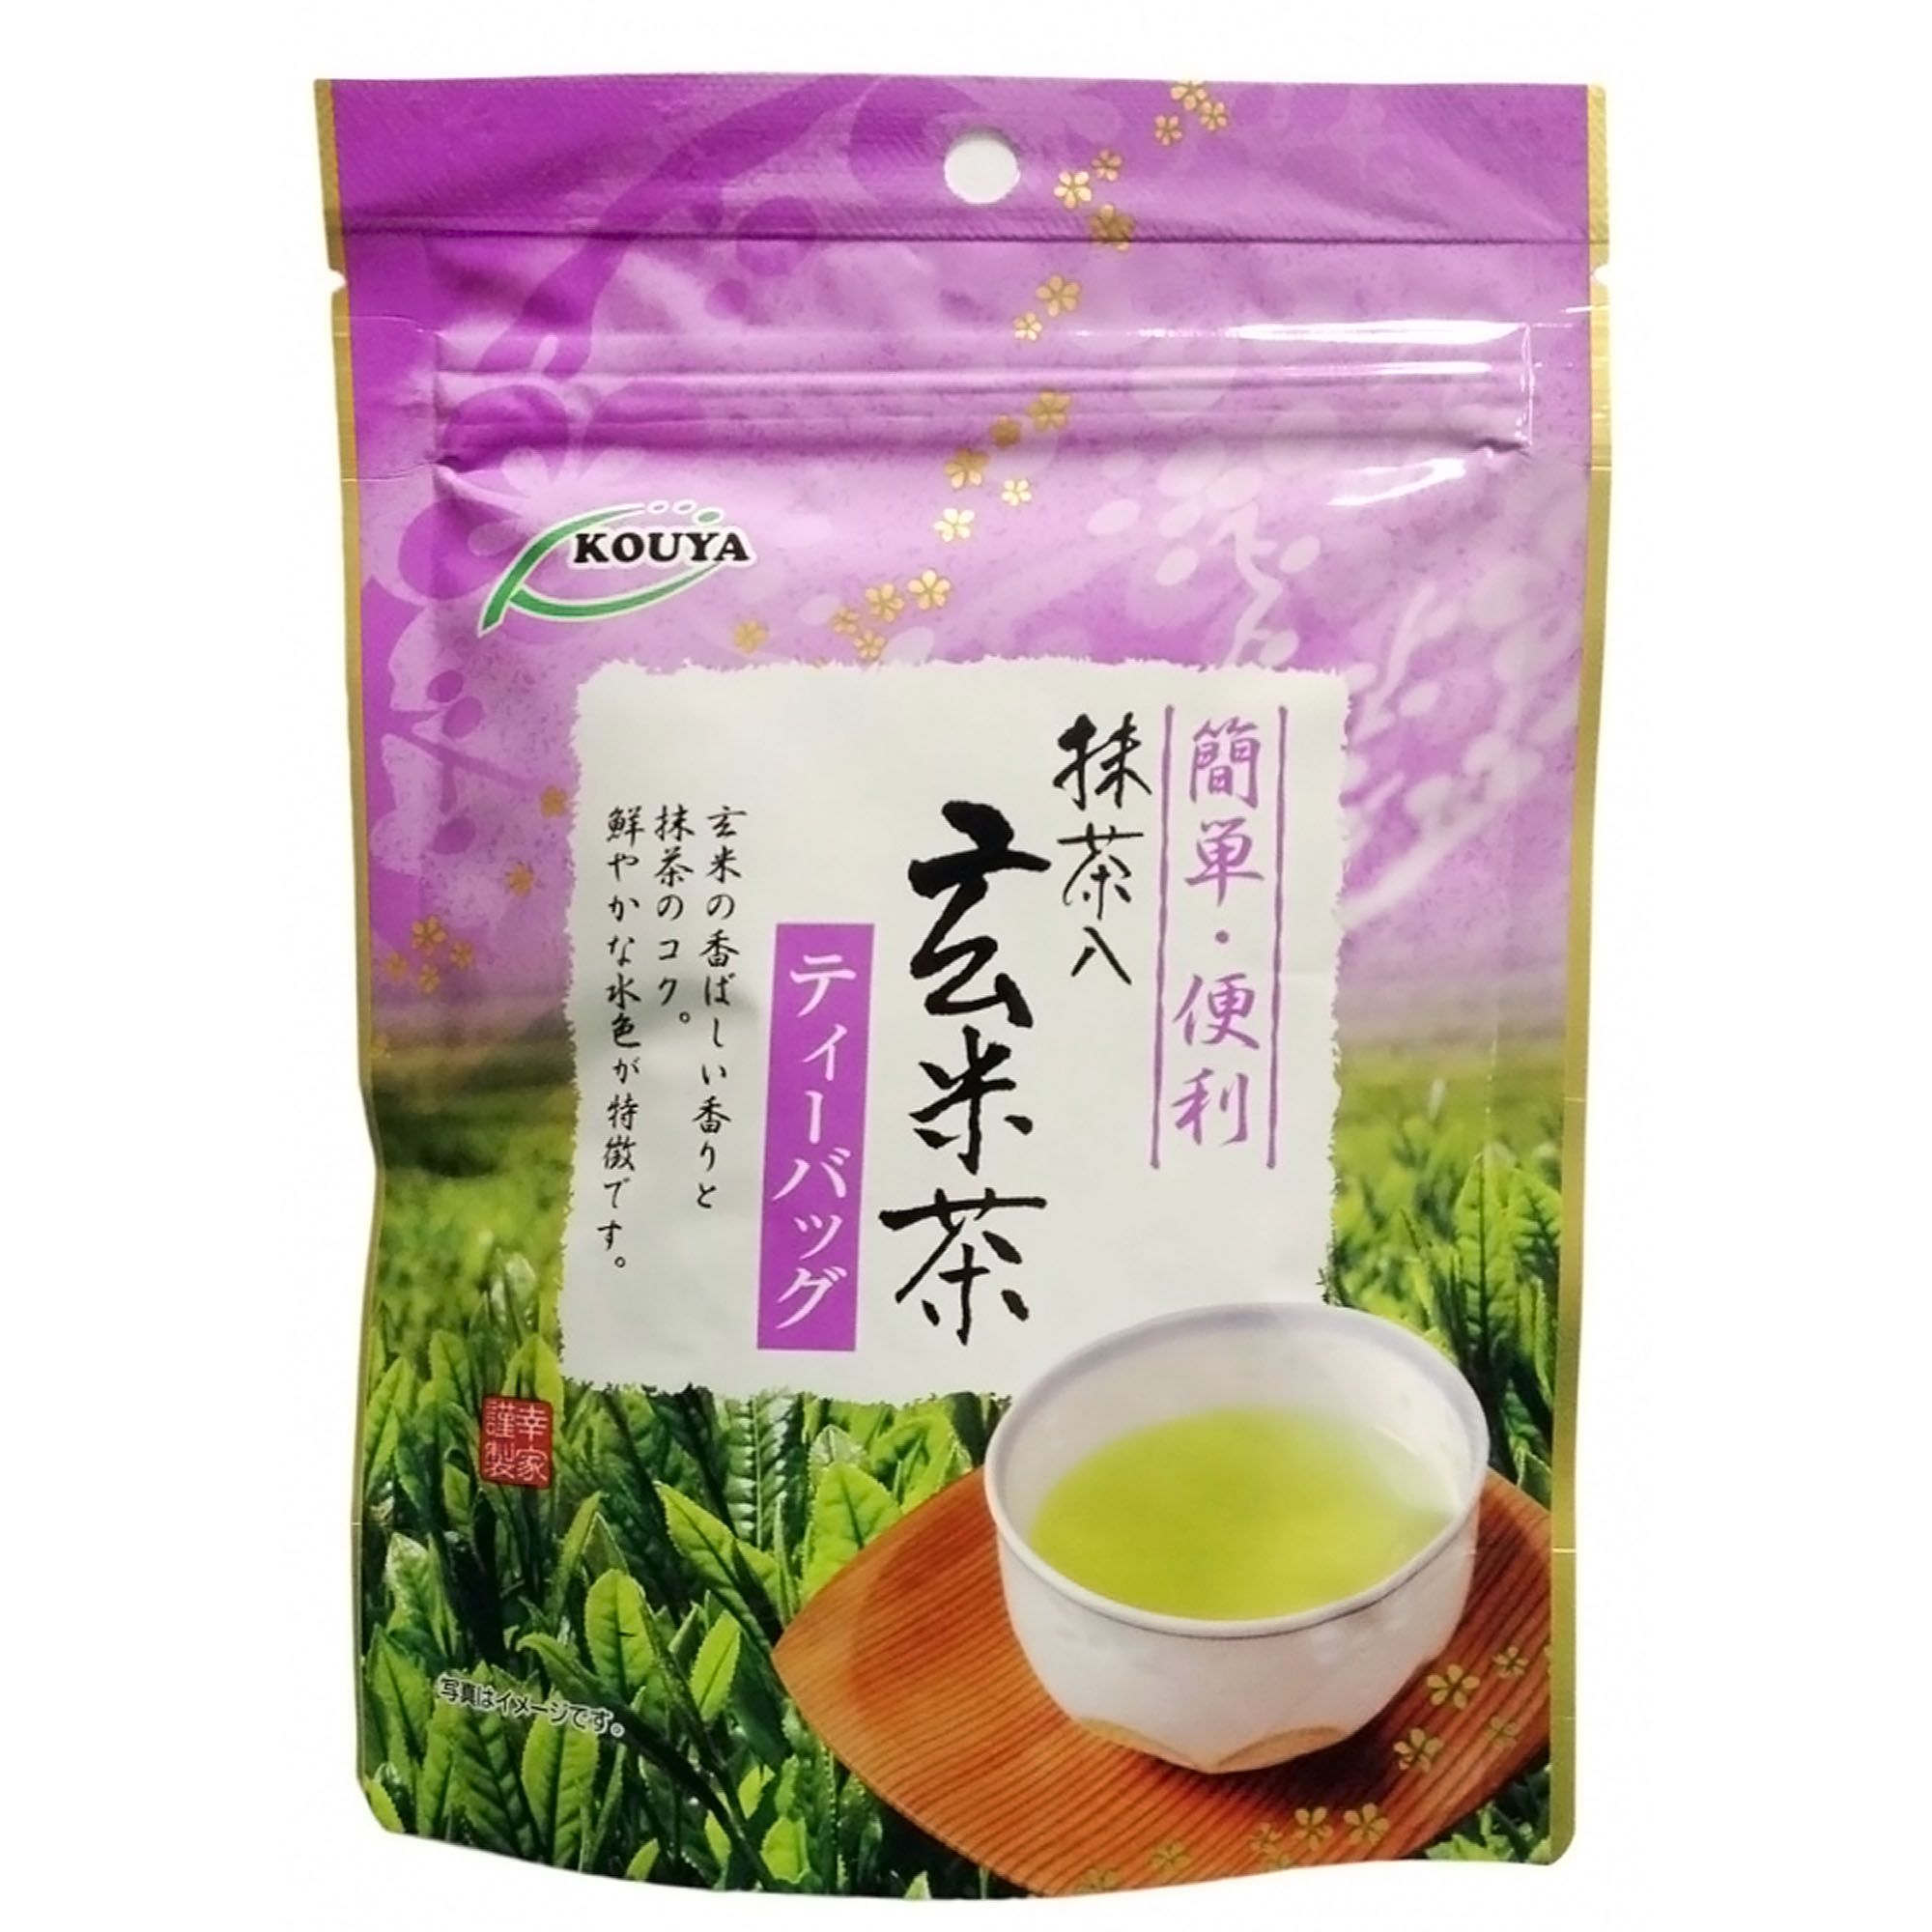 Японский чай Kouya Геммай-ча (15 шт), 30 г чай 101 чай японский зеленый матча 40 г